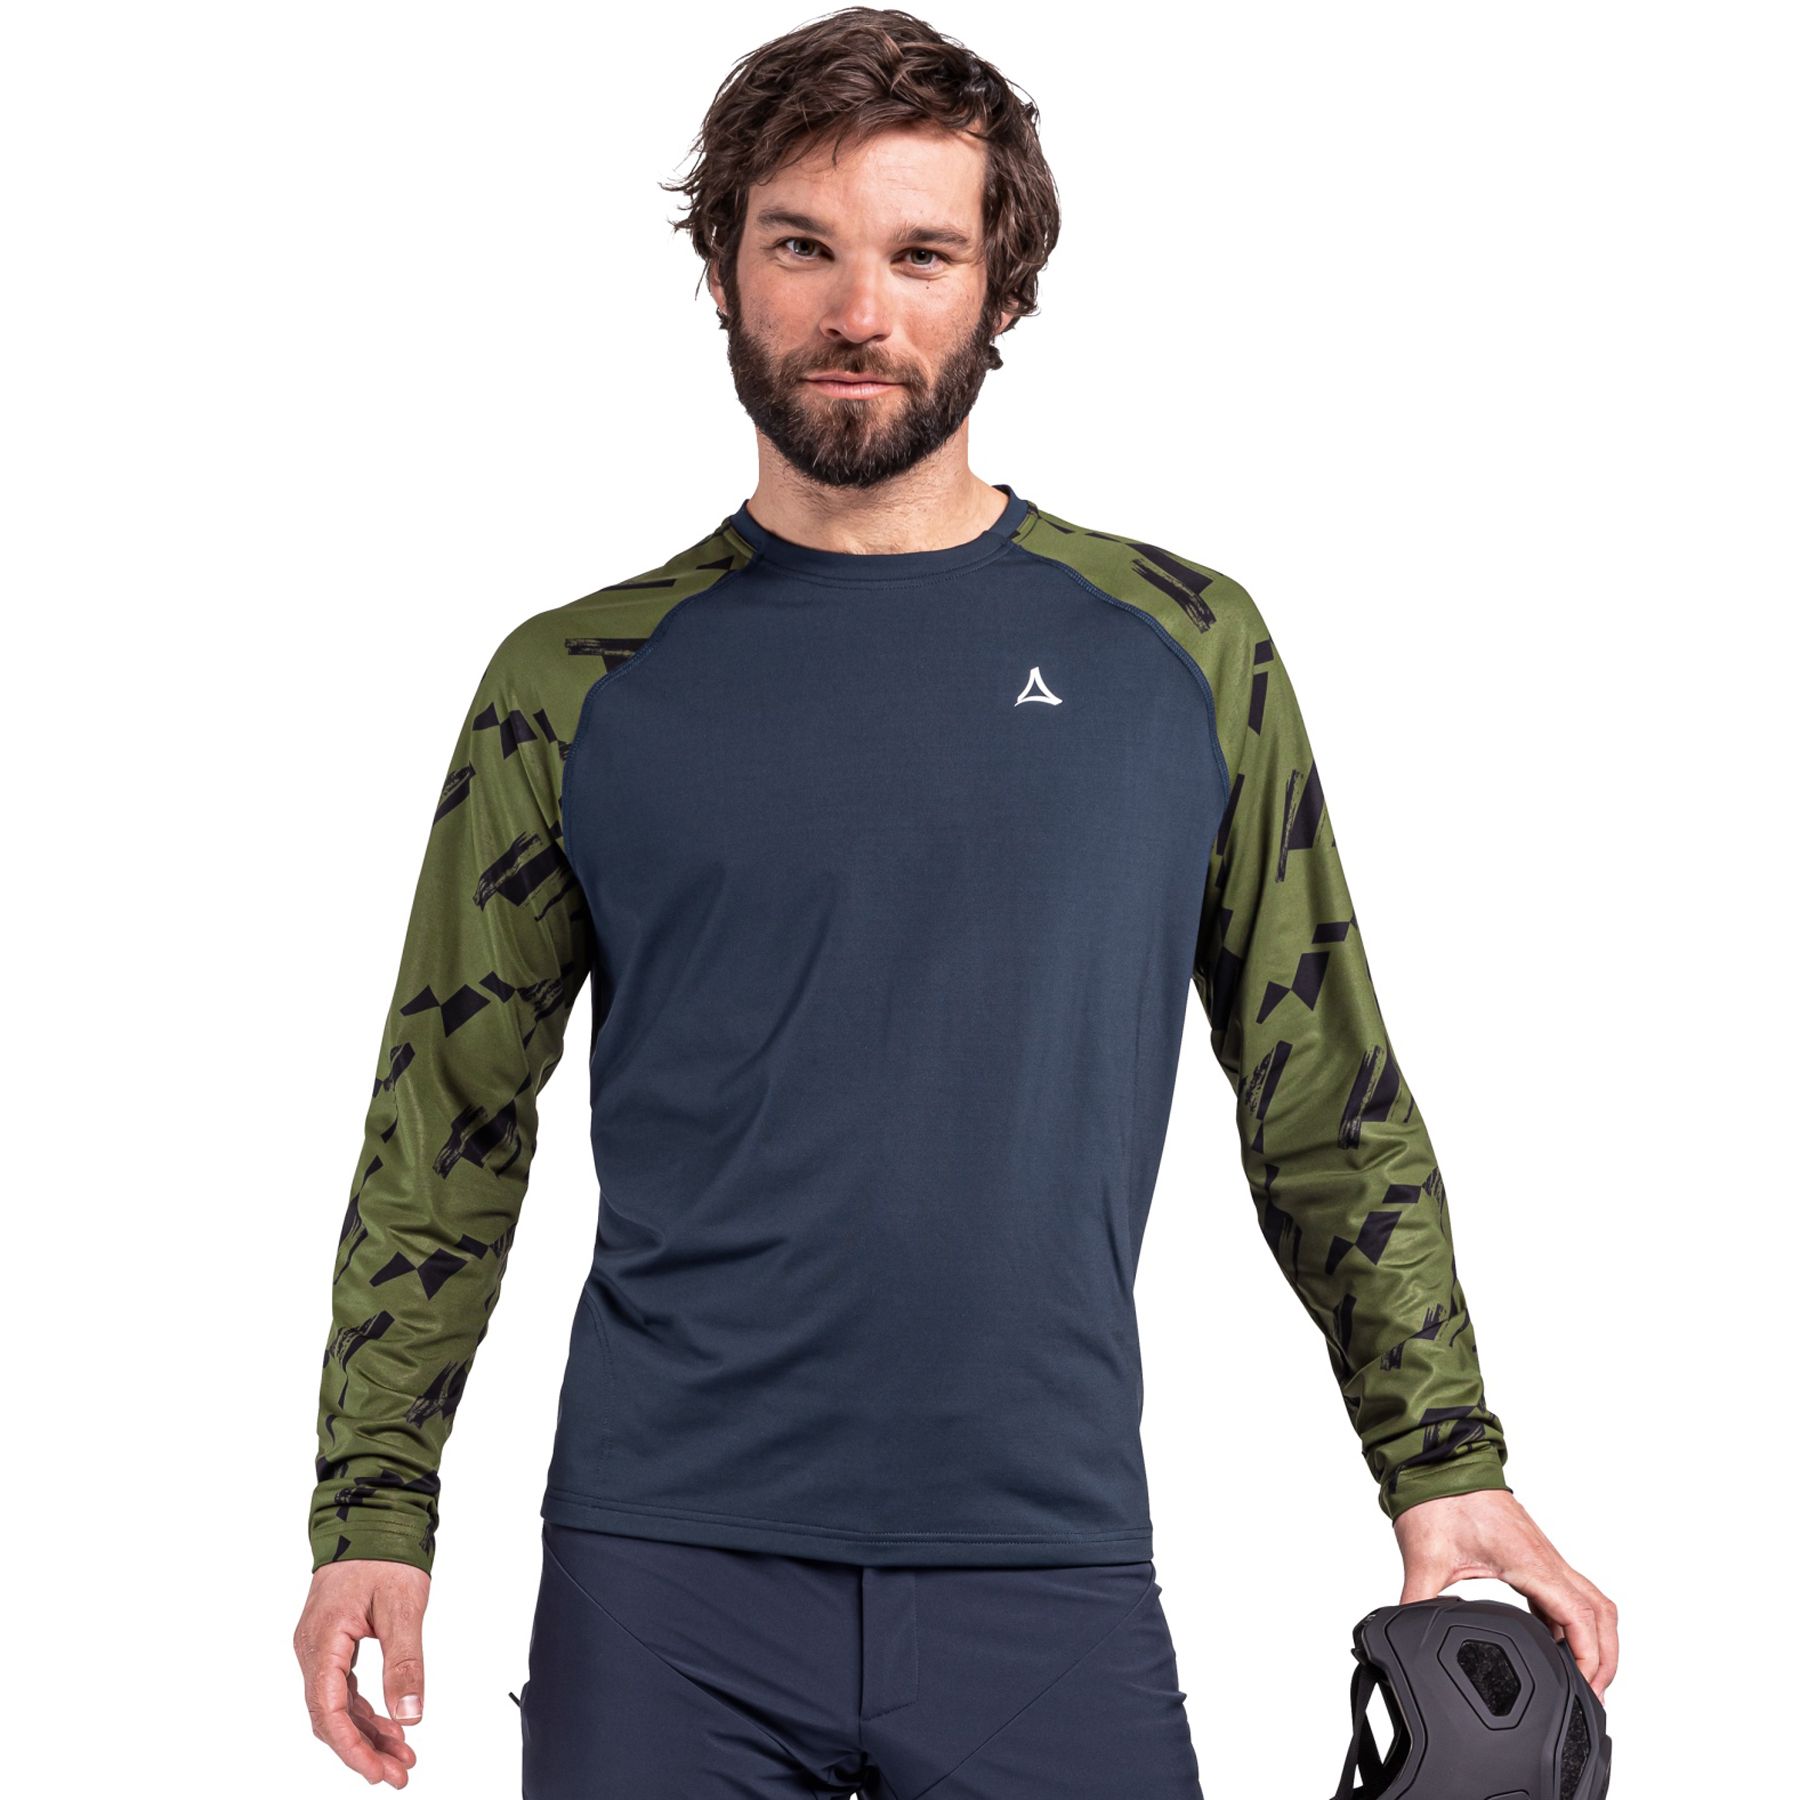 Productfoto van Schöffel Lakata Trail Shirt met Lange Mouwen - navy blazer 8820